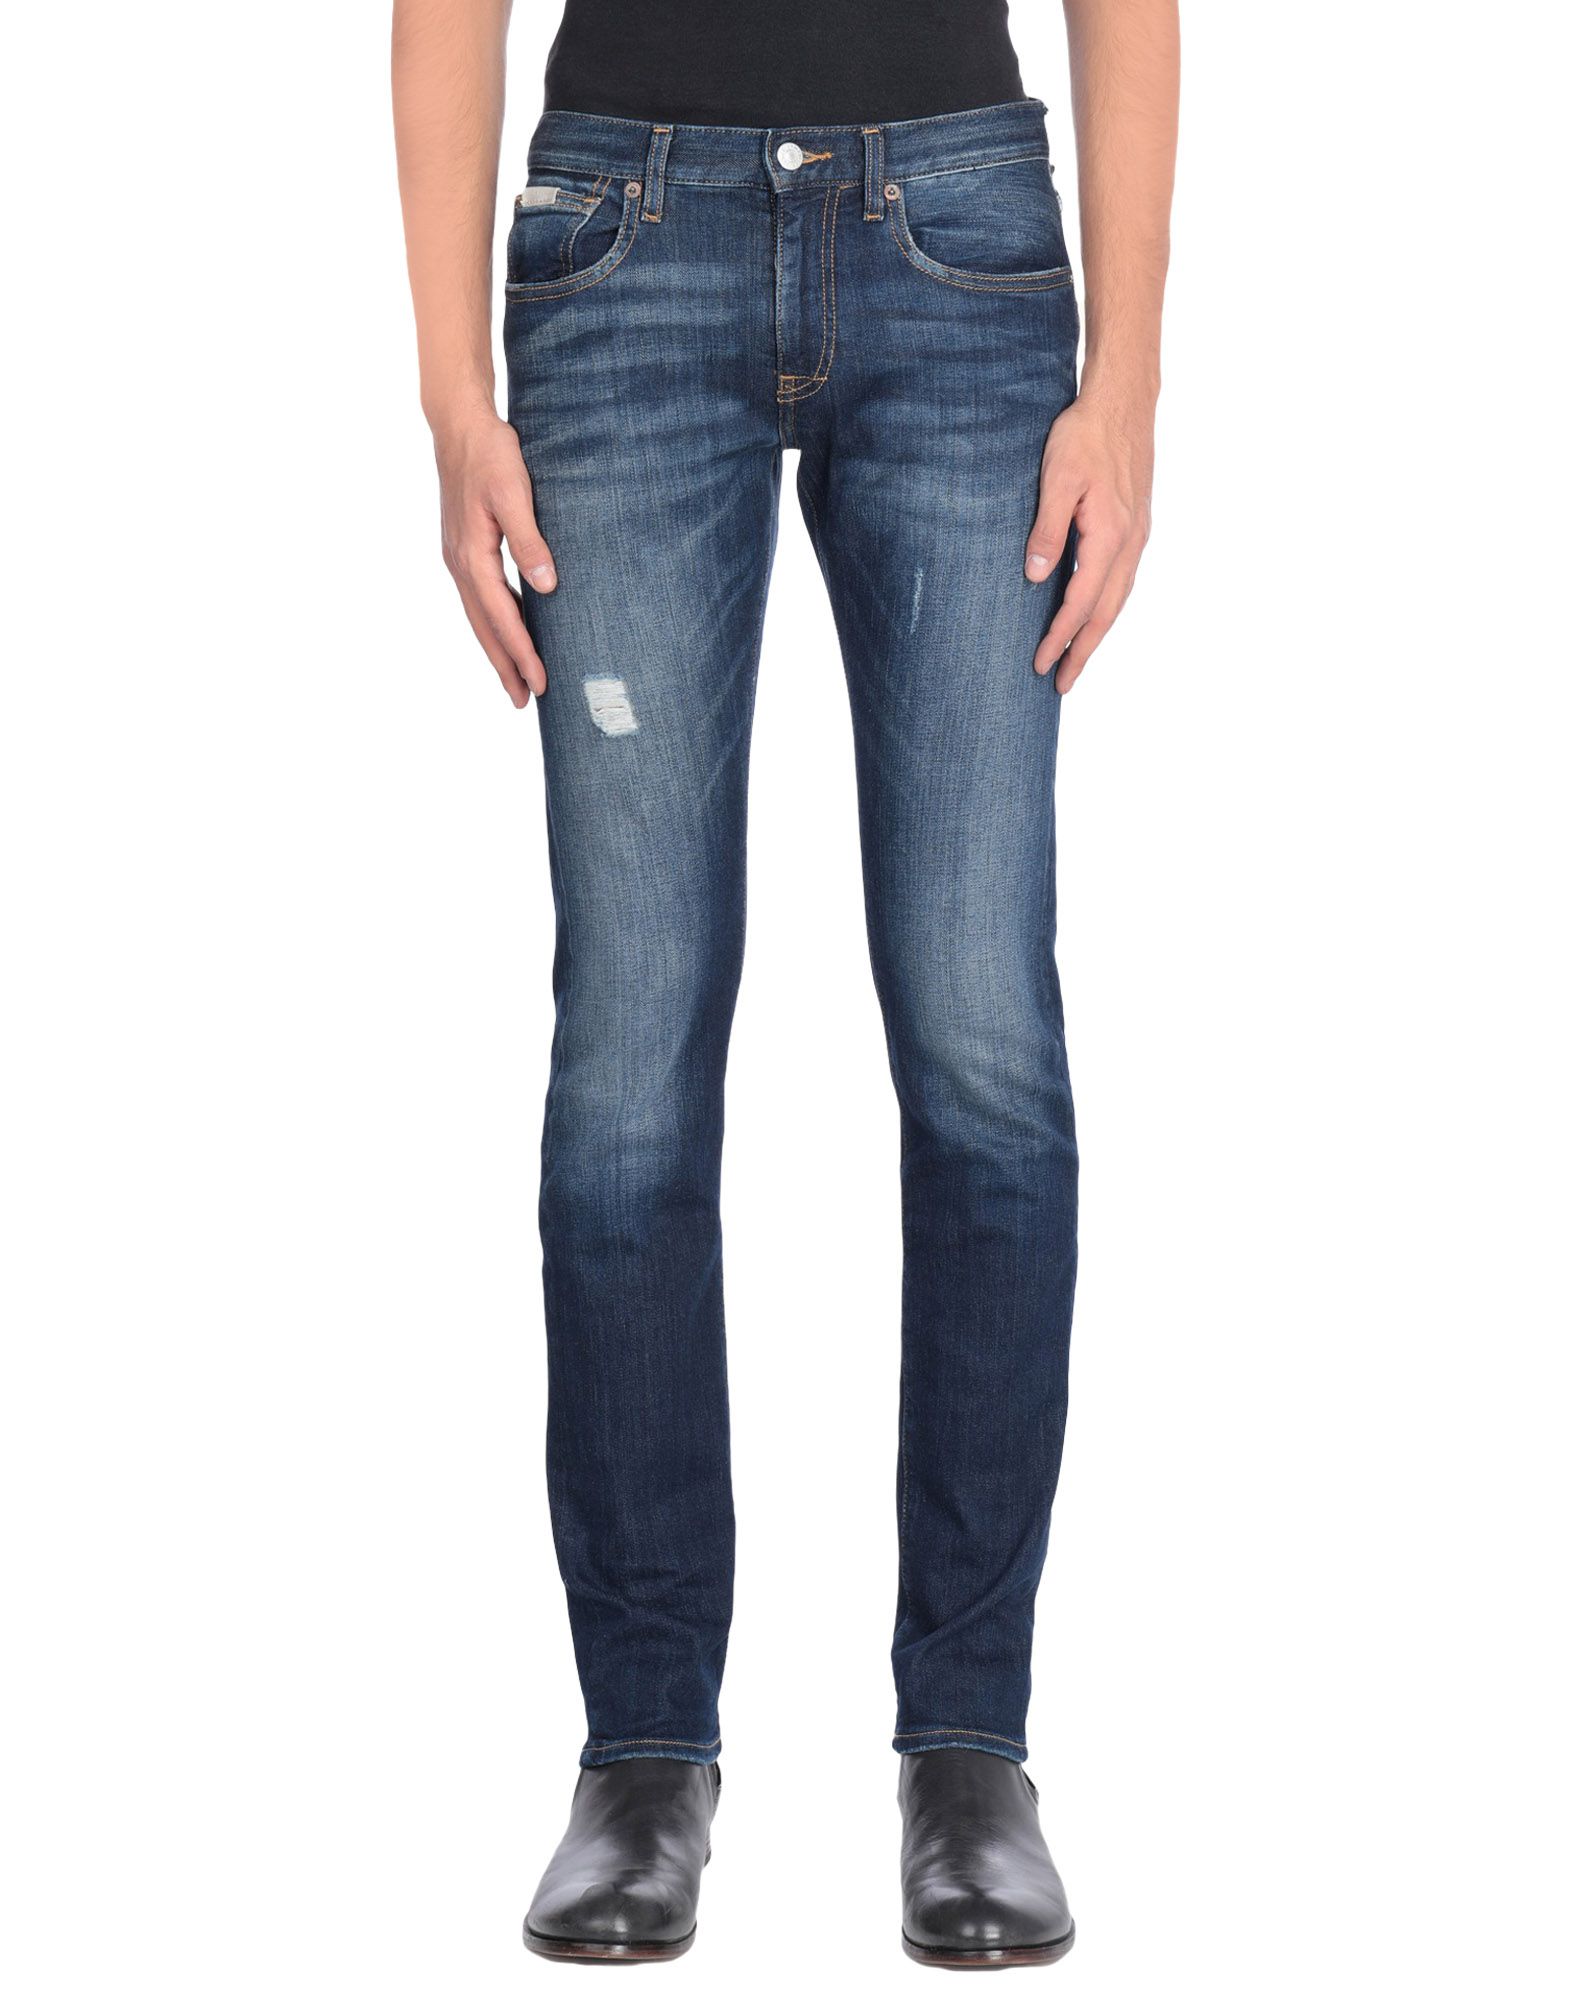 armani exchange jeans online